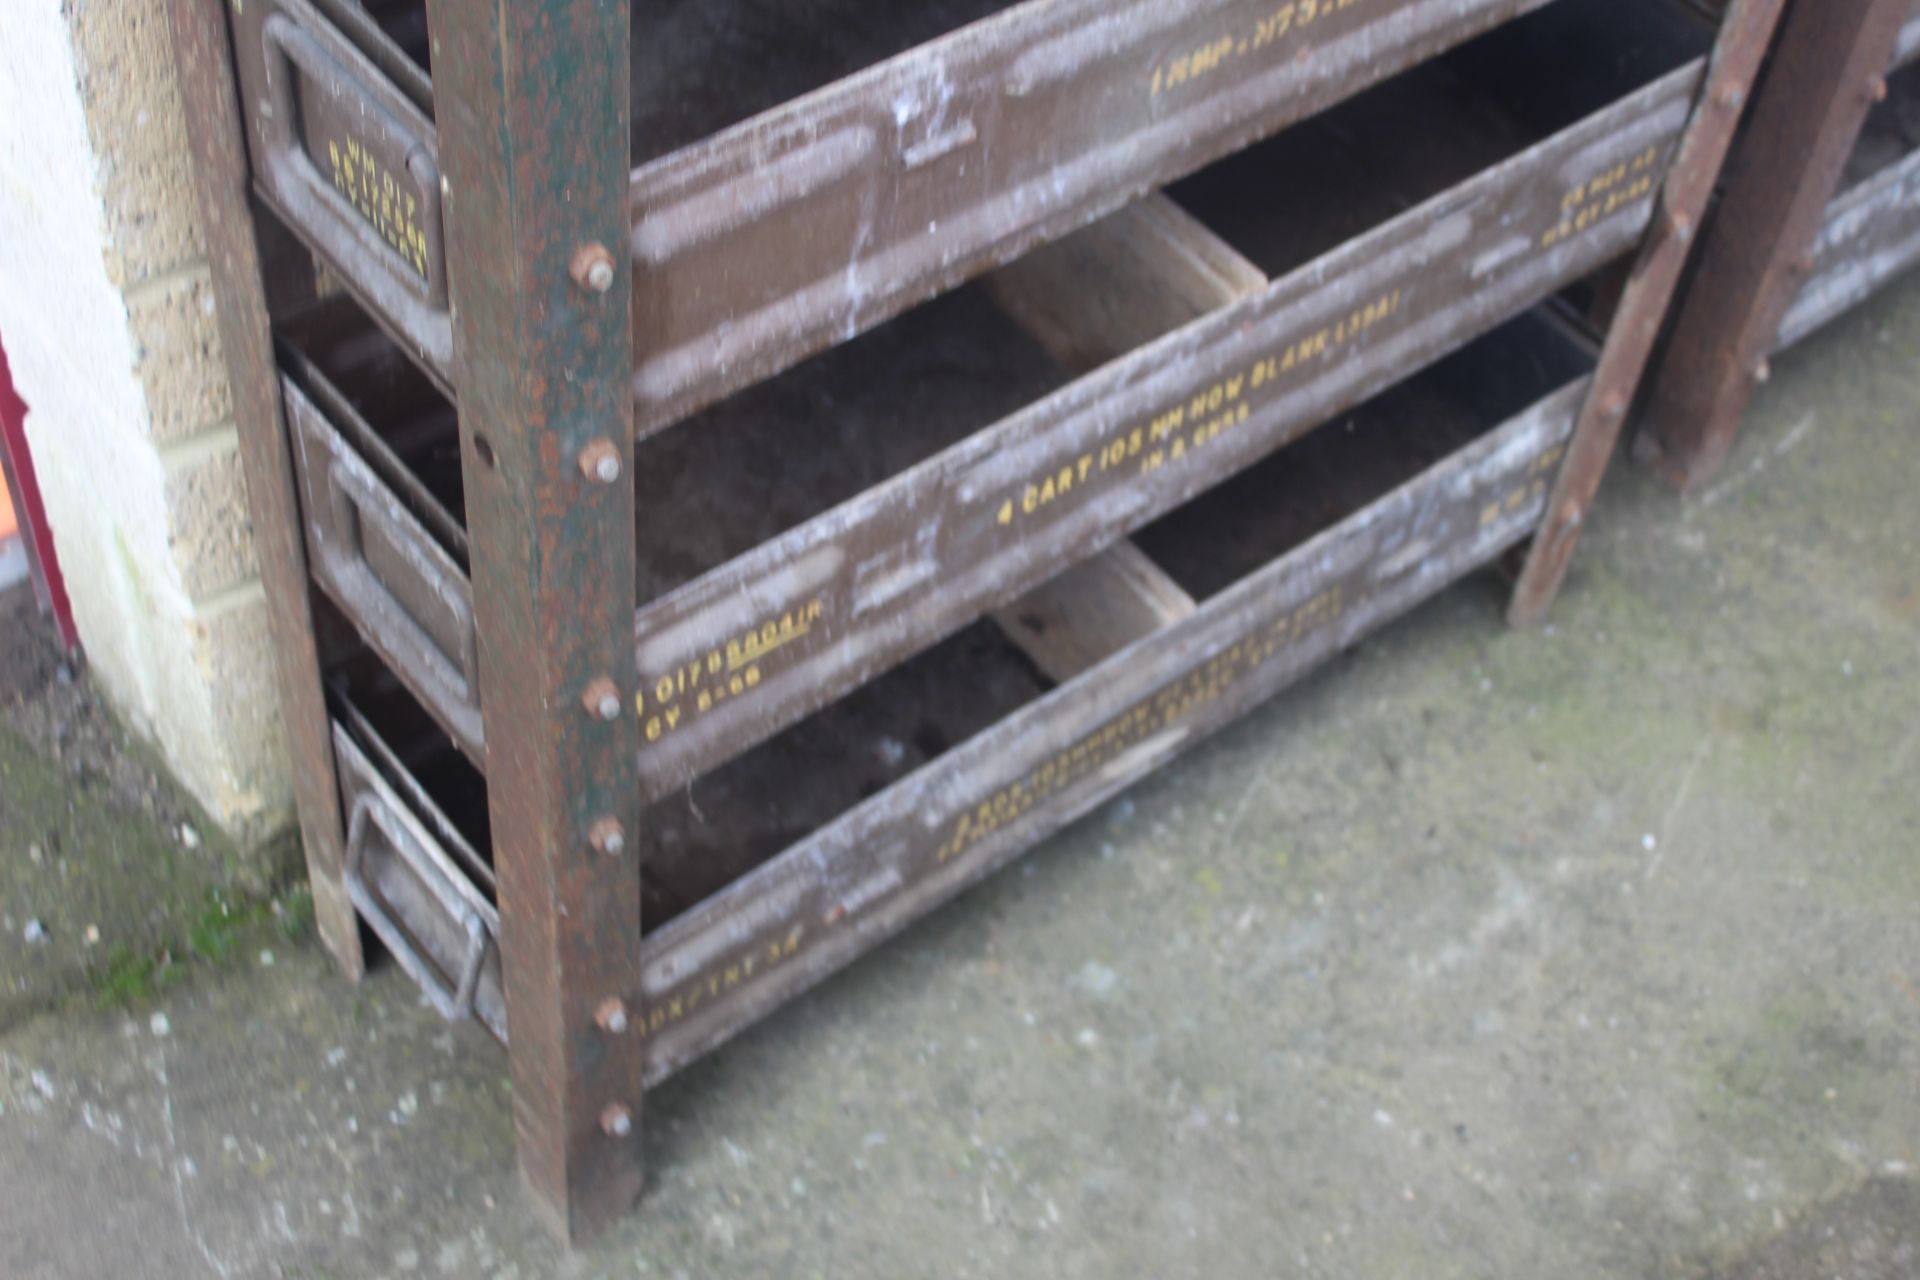 Workshop storage unit made from ammunition boxes. - Image 3 of 3